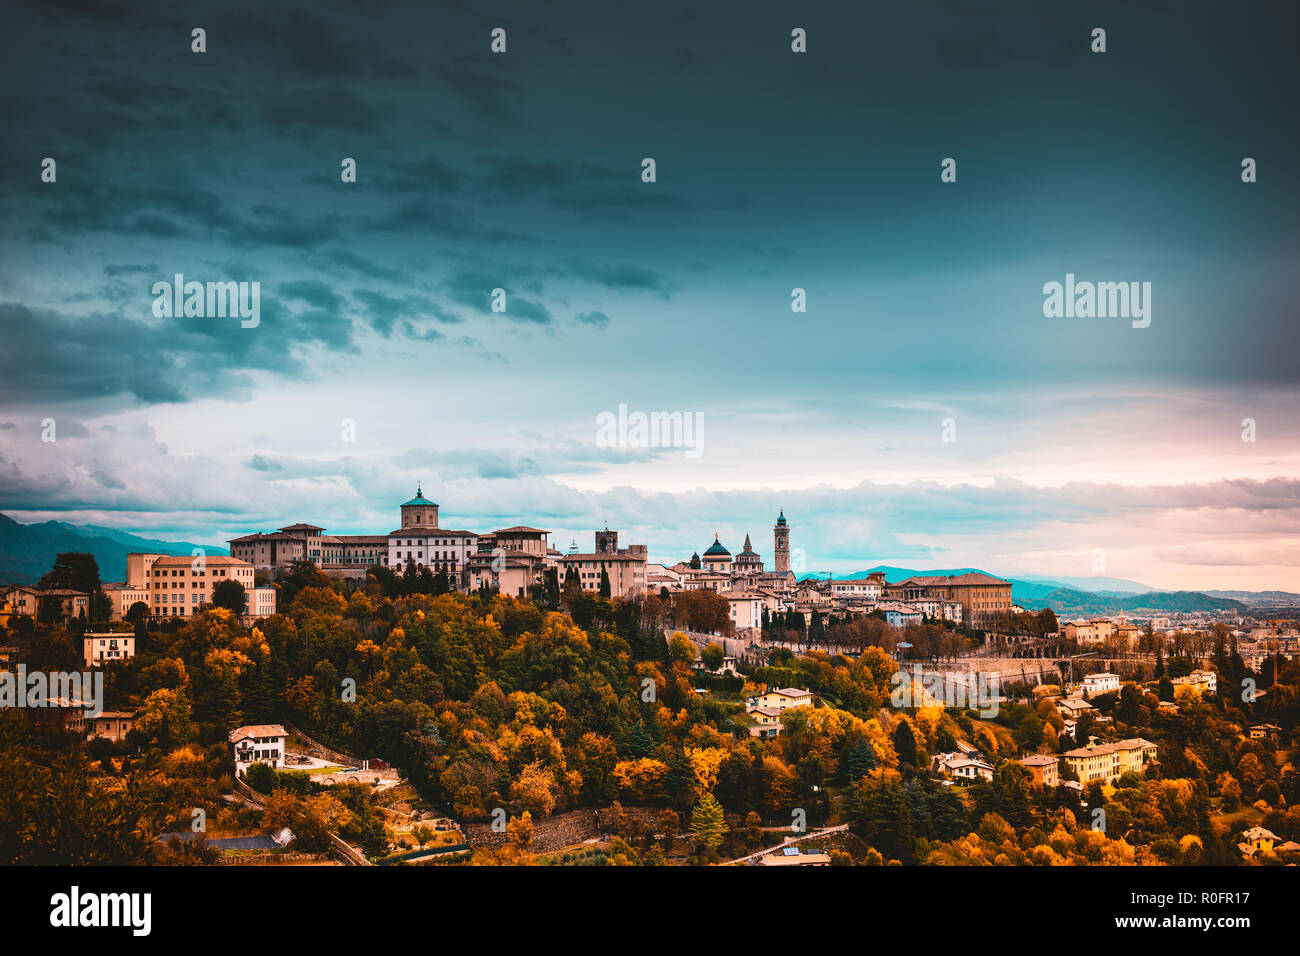 Schöne Stadtbild Herbst - Altstadt von Bergamo - Italien Reiseziel Stockfoto